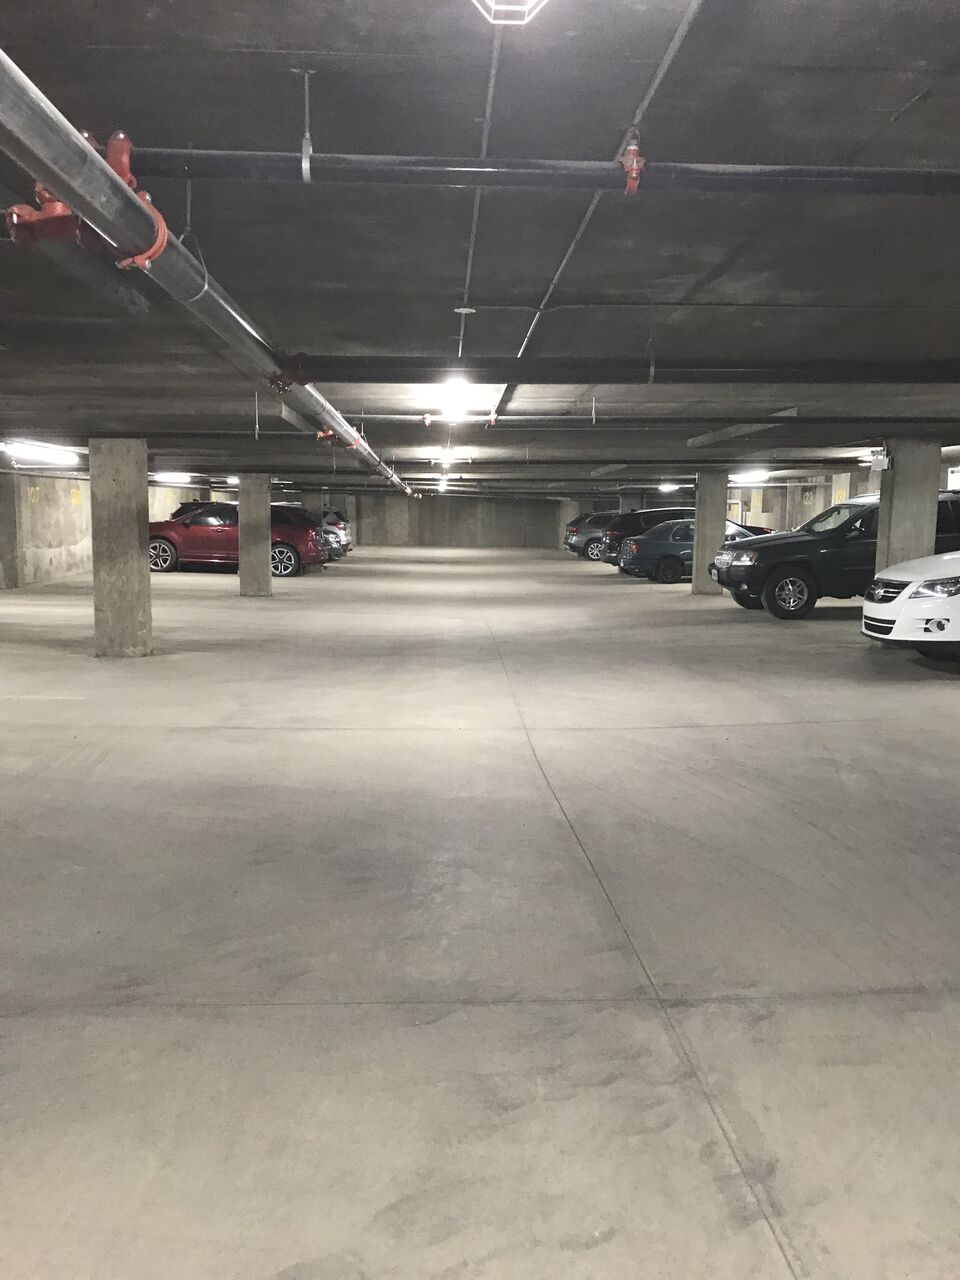 https://metro1827.ca/wp-content/uploads/2018/08/Underground-parking-2.jpeg